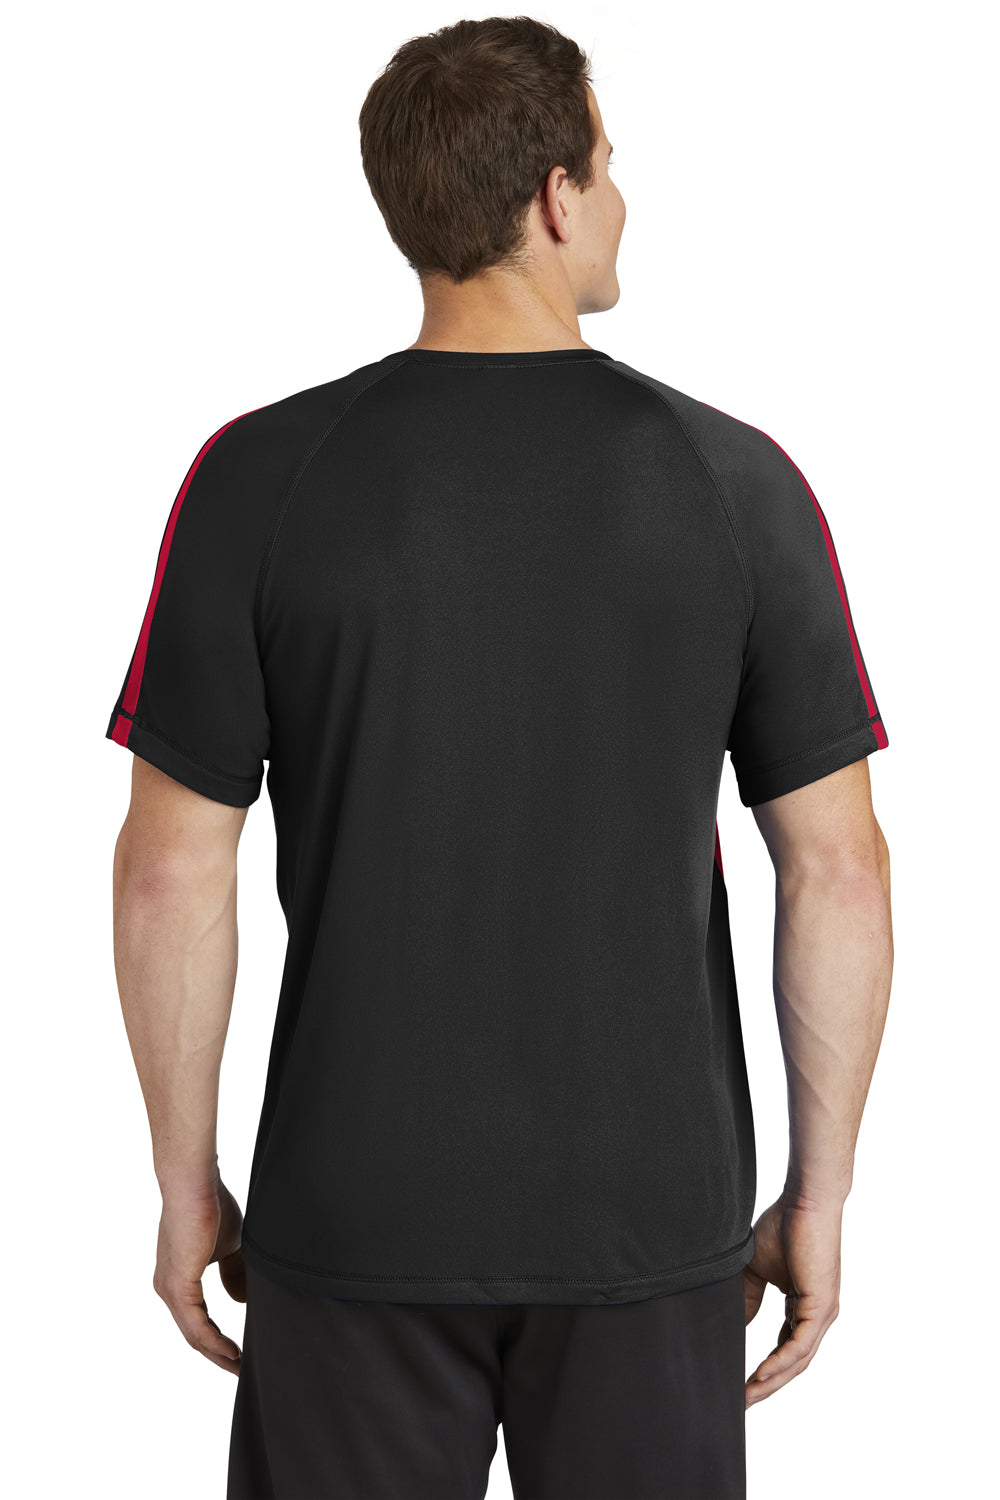 Sport-Tek ST351 Mens Competitor Moisture Wicking Short Sleeve Crewneck T-Shirt Black/Red Back